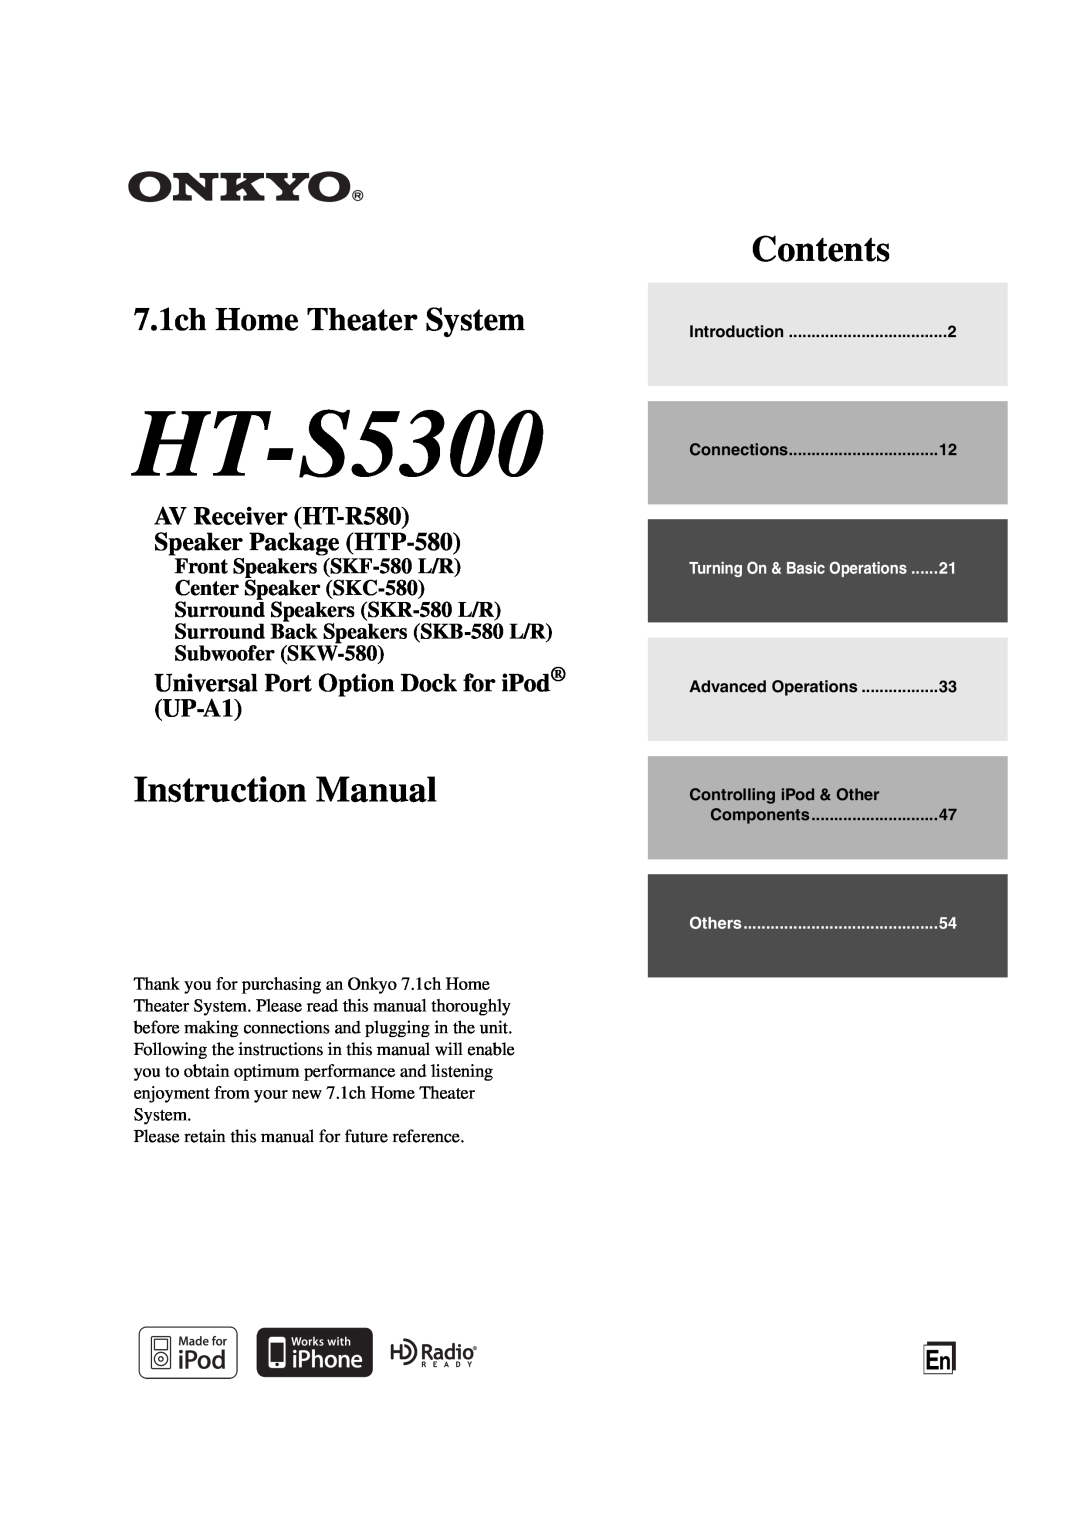 Onkyo HT-S5300 instruction manual Front Speakers SKF-580L/R Center Speaker SKC-580, Surround Speakers SKR-580L/R, Contents 